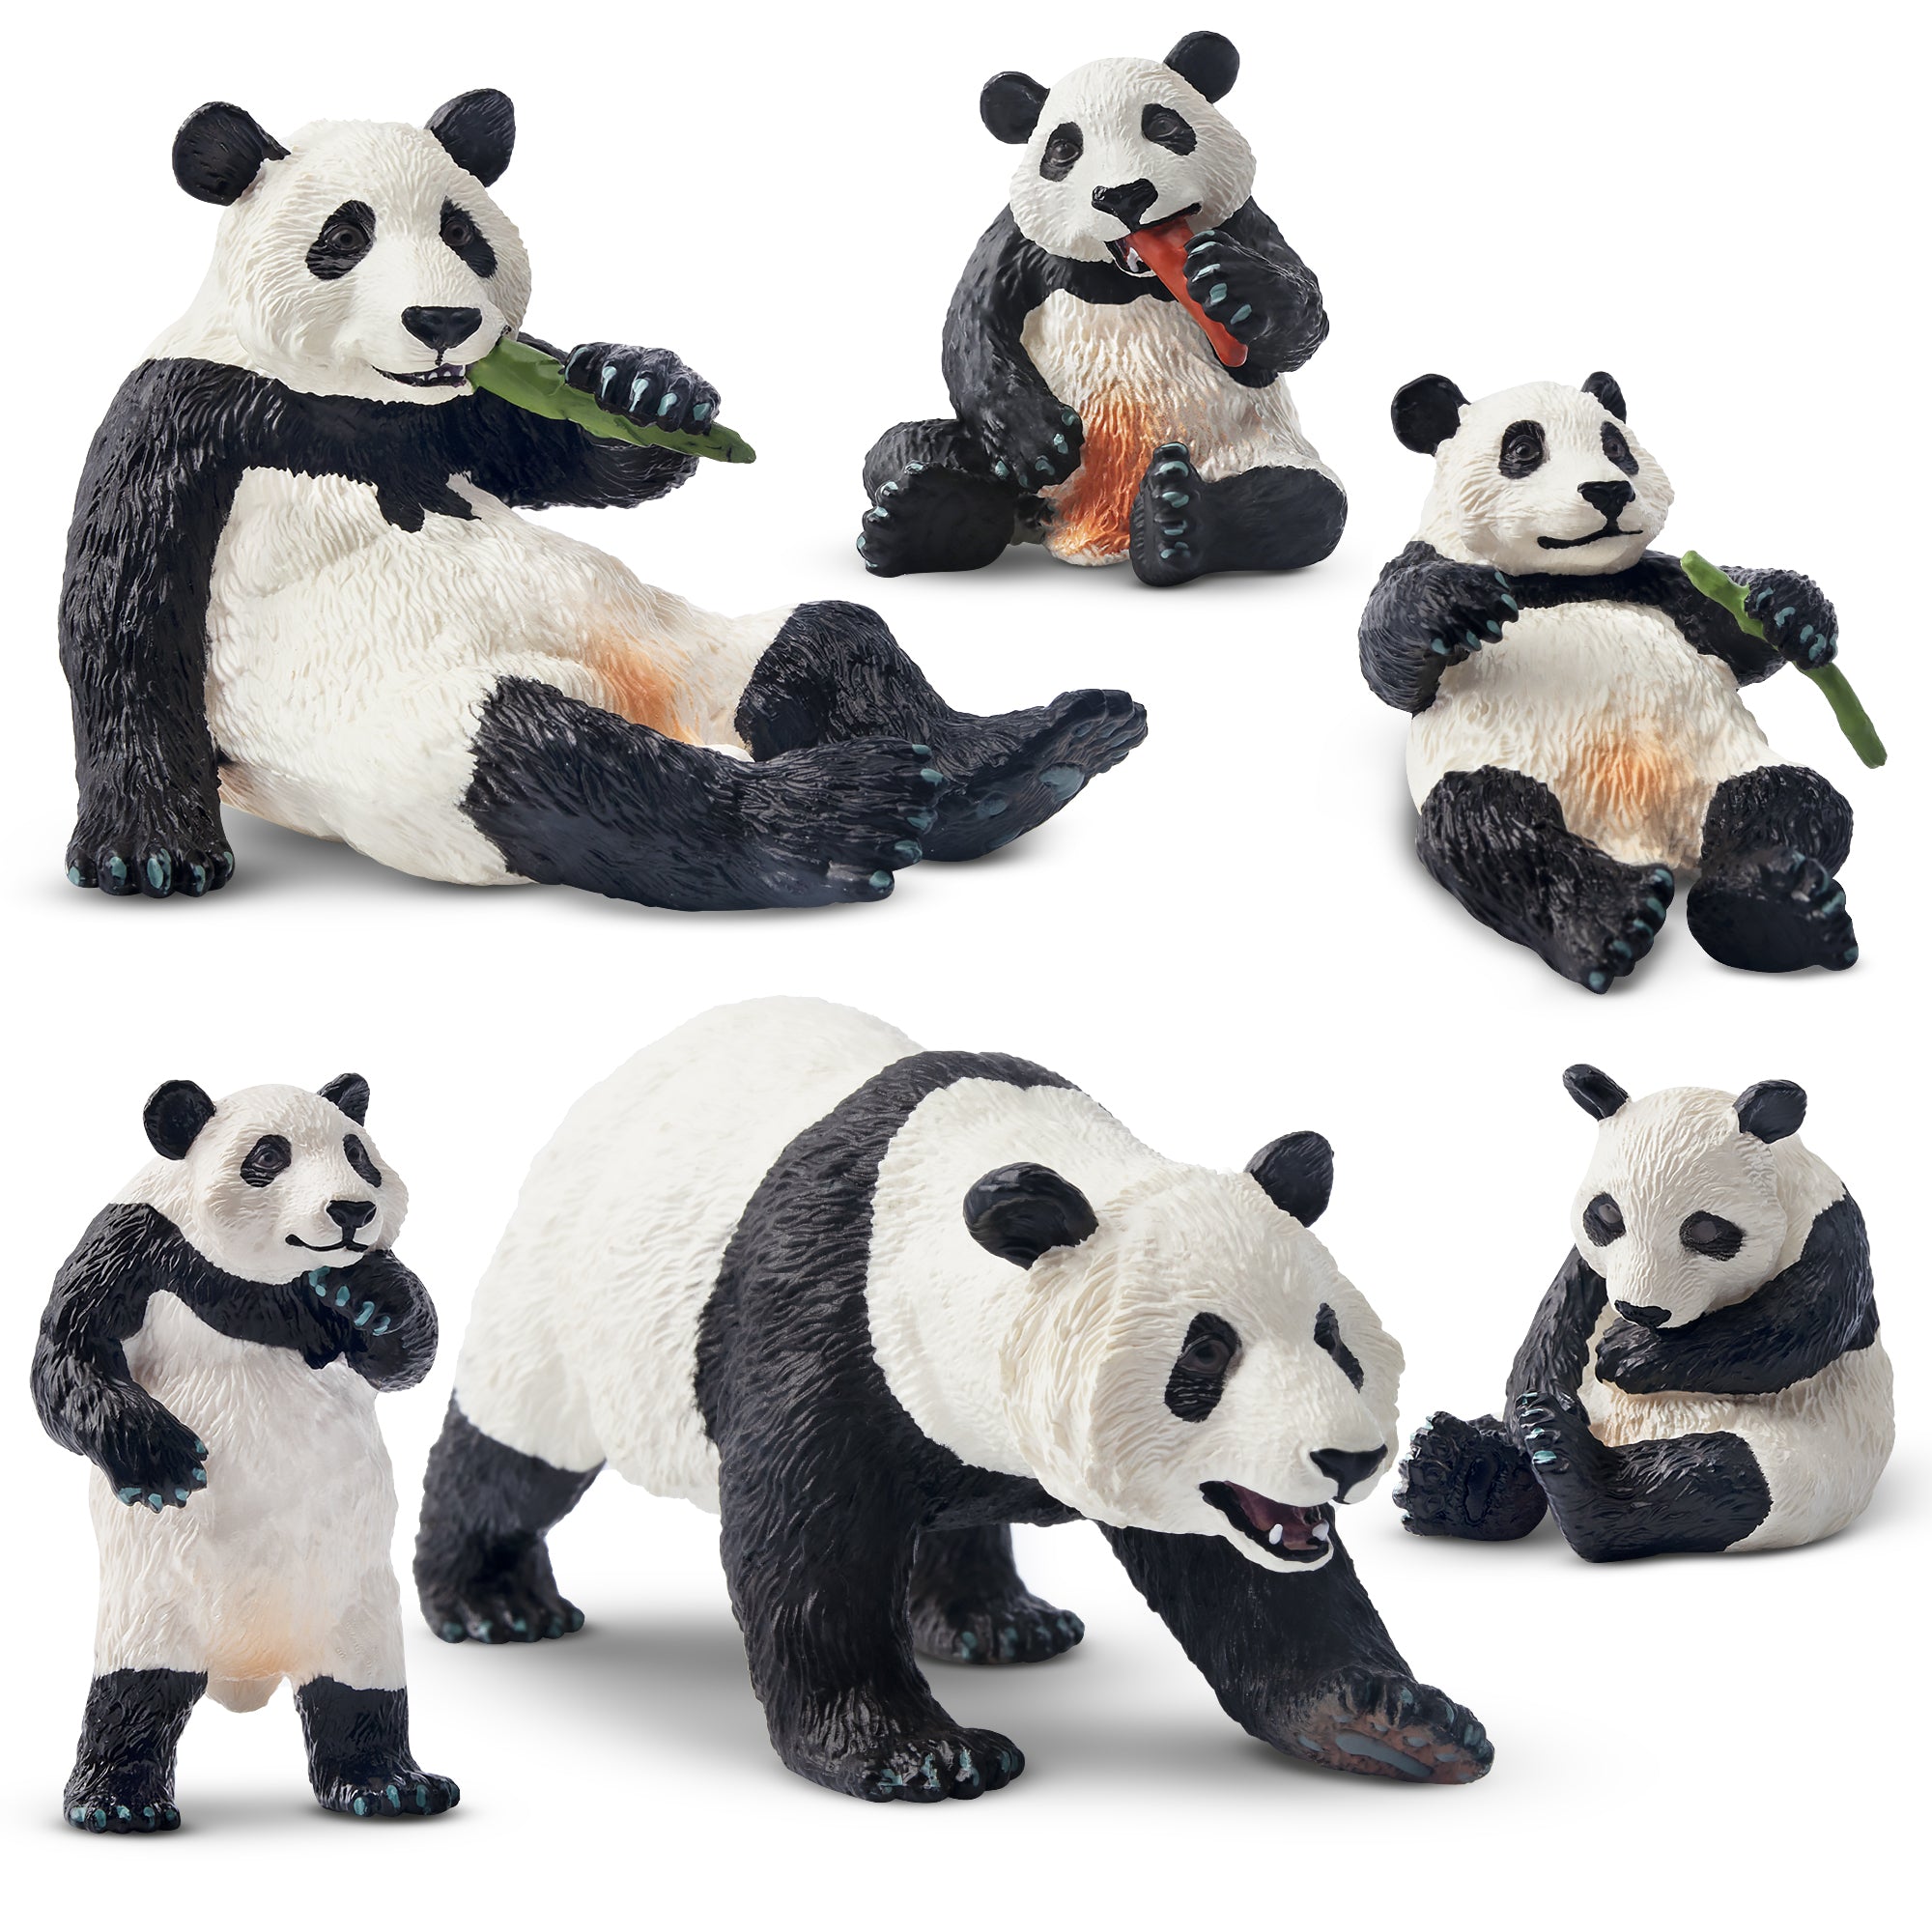 6-Piece Plastic Jungle Panda Animal Figurines Family Set